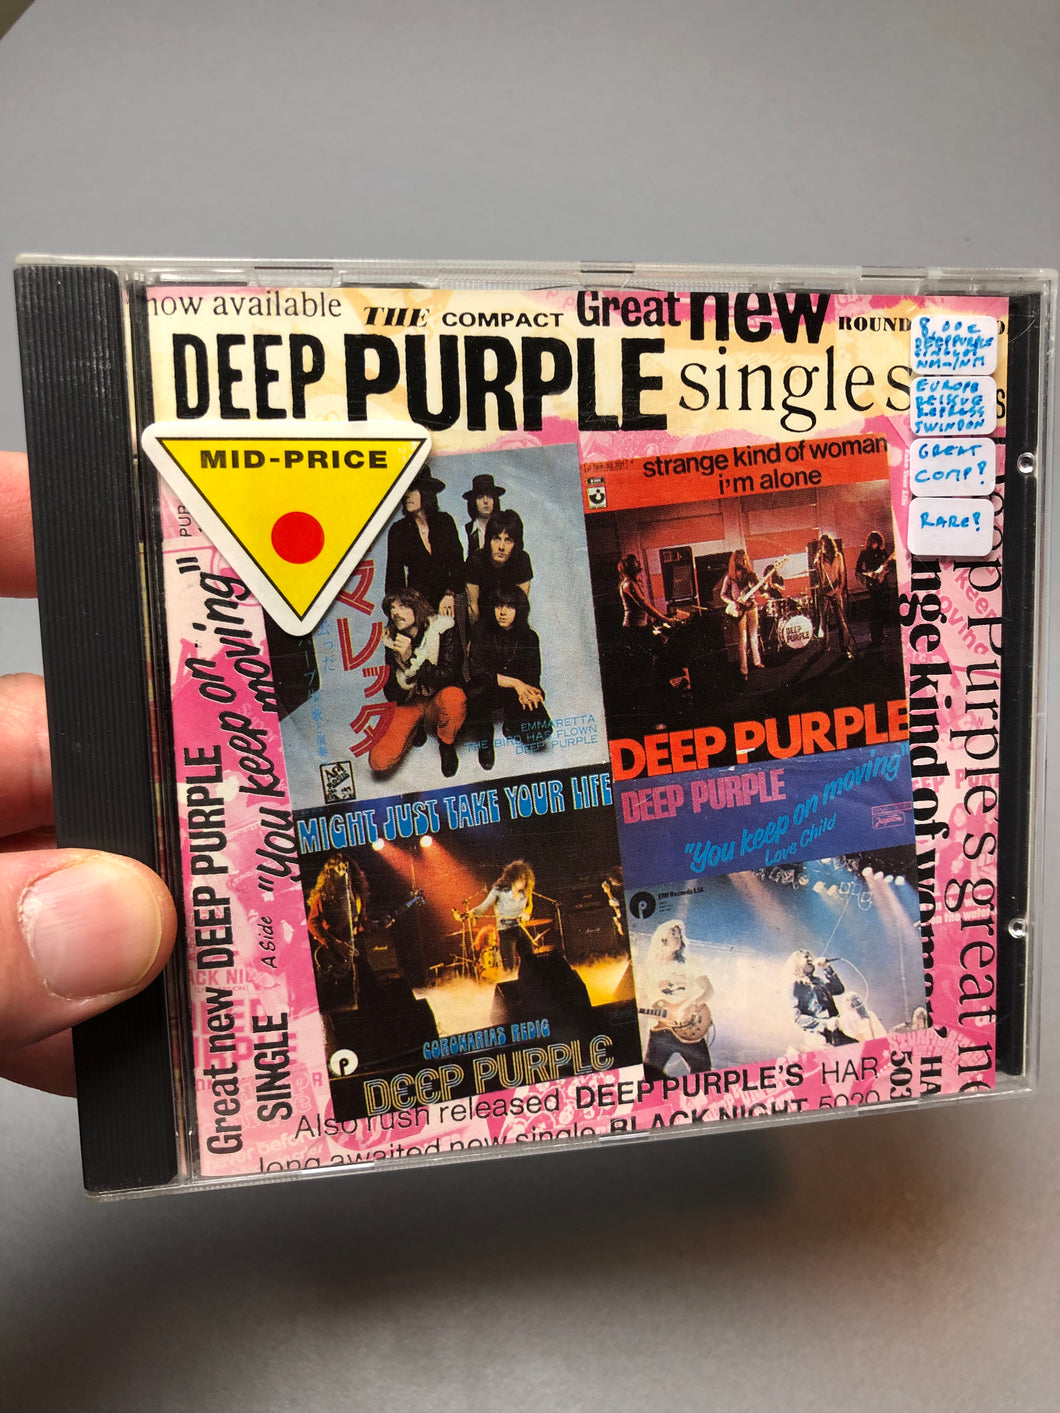 Deep Purple: Singles A’s & B’s, reissue, England 1993